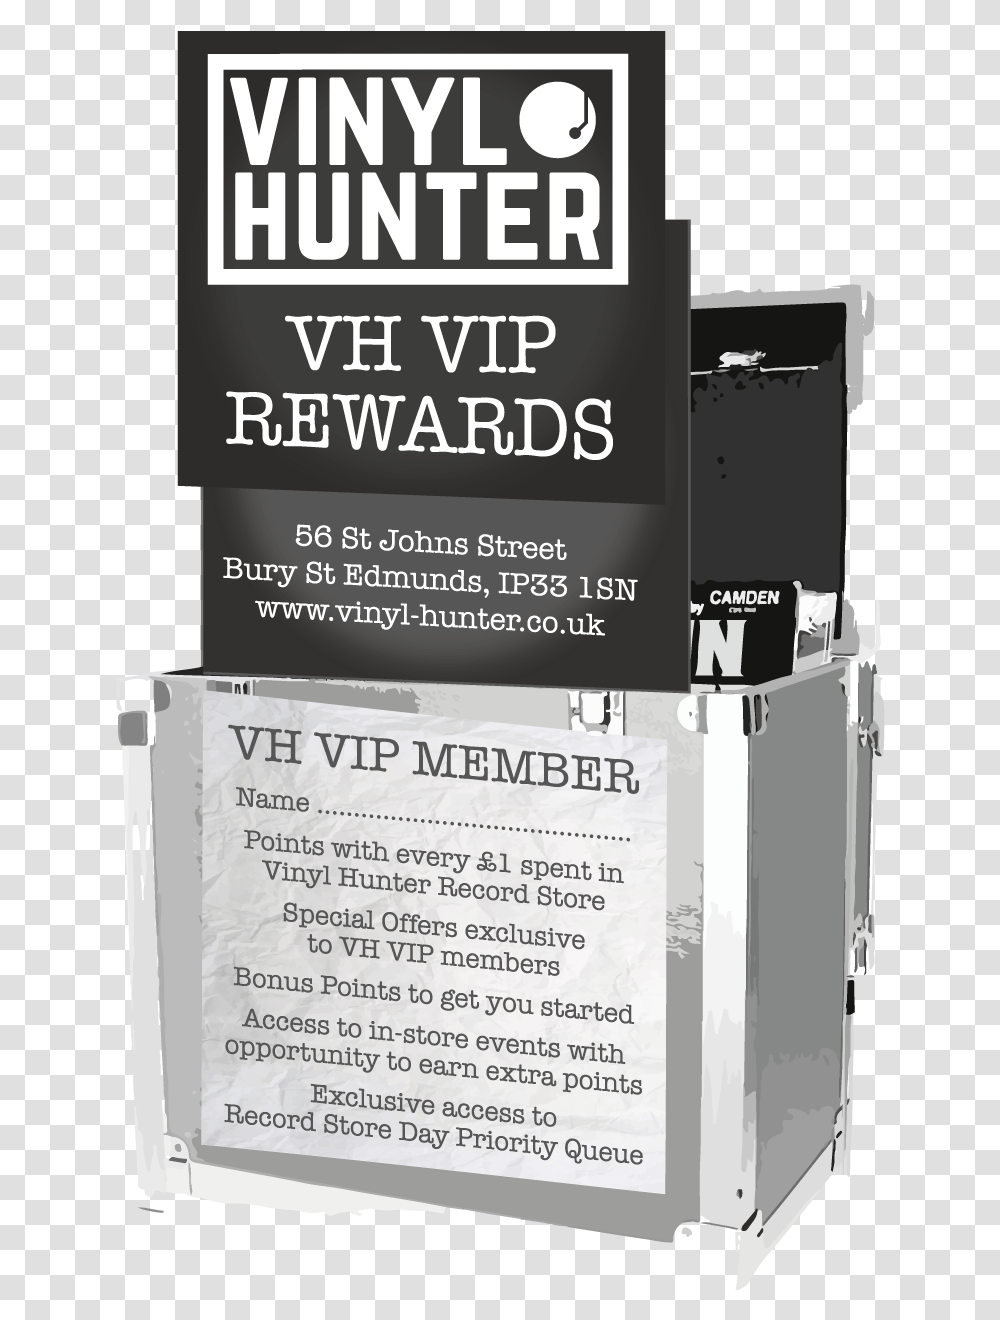 Vinyl Hunter Vip Club Don't Care, Advertisement, Poster, Flyer Transparent Png